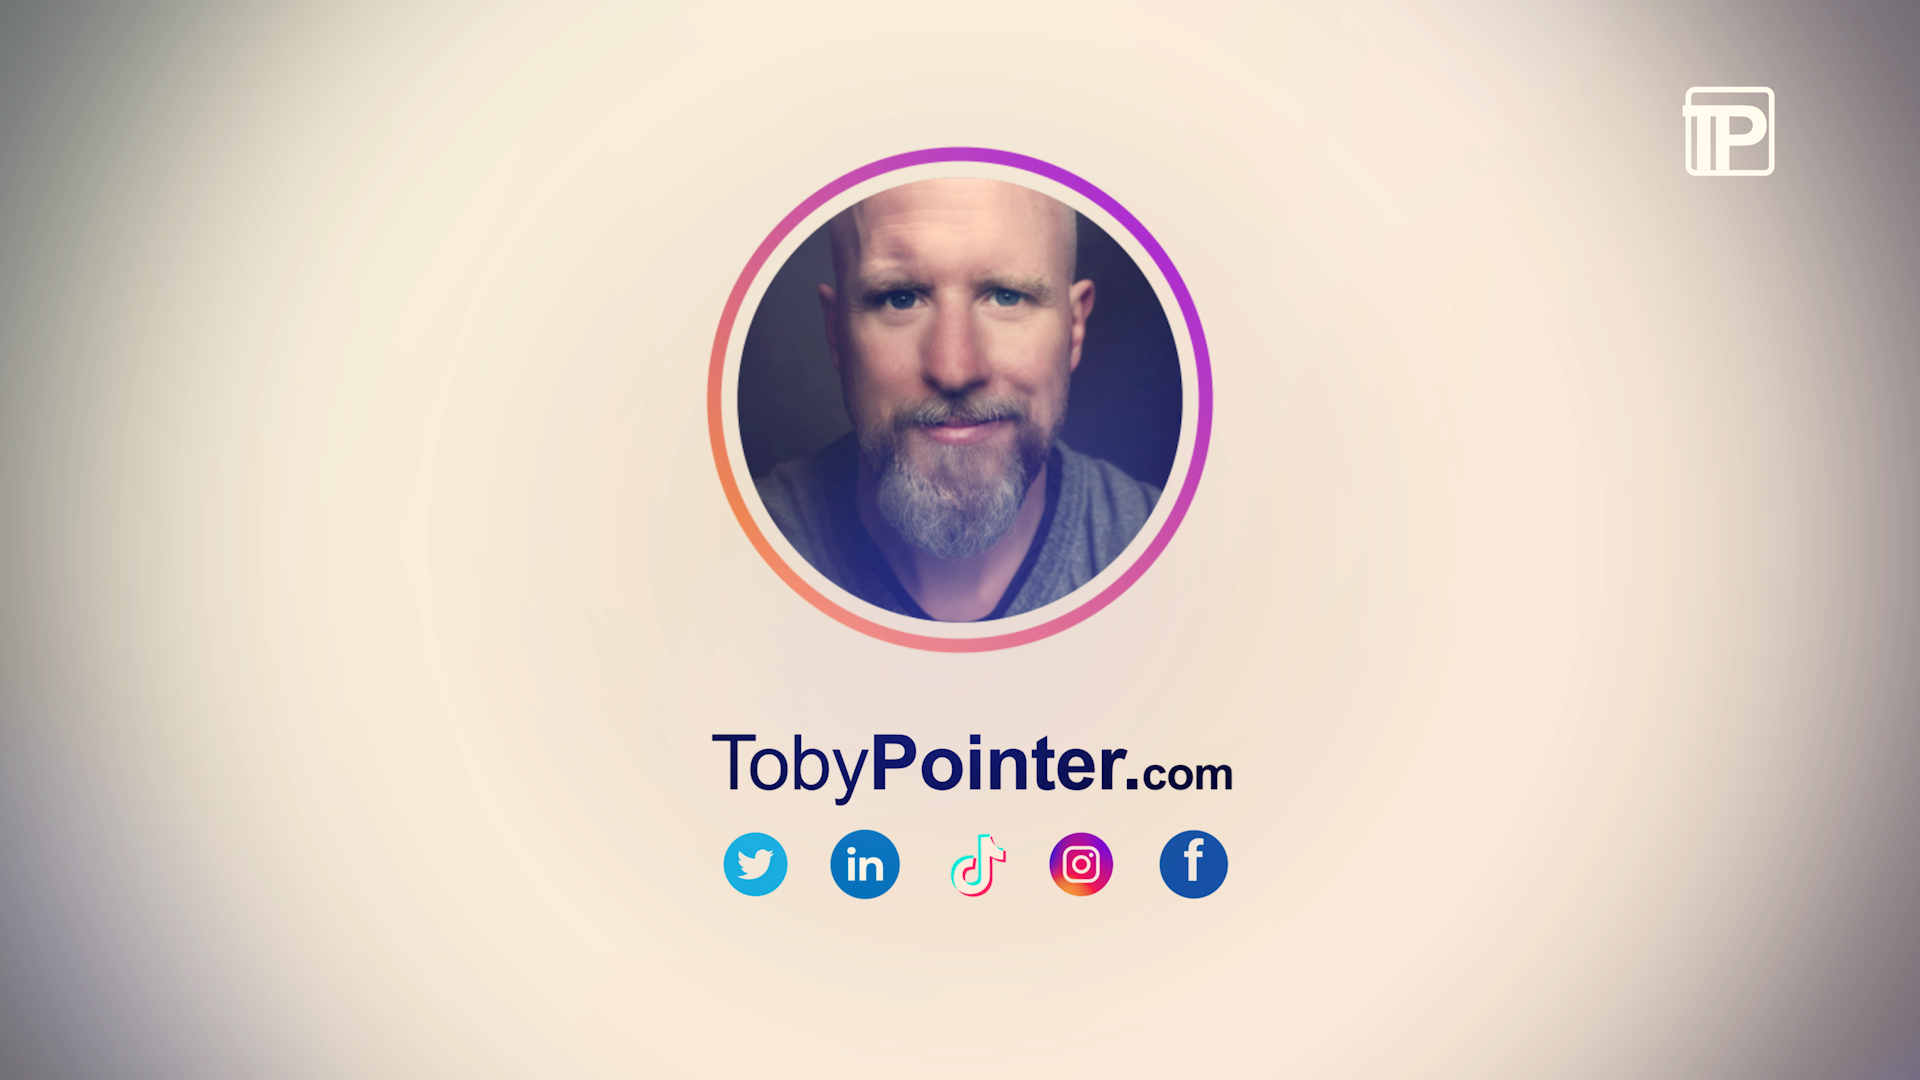 TobyPointer.com
00 +00